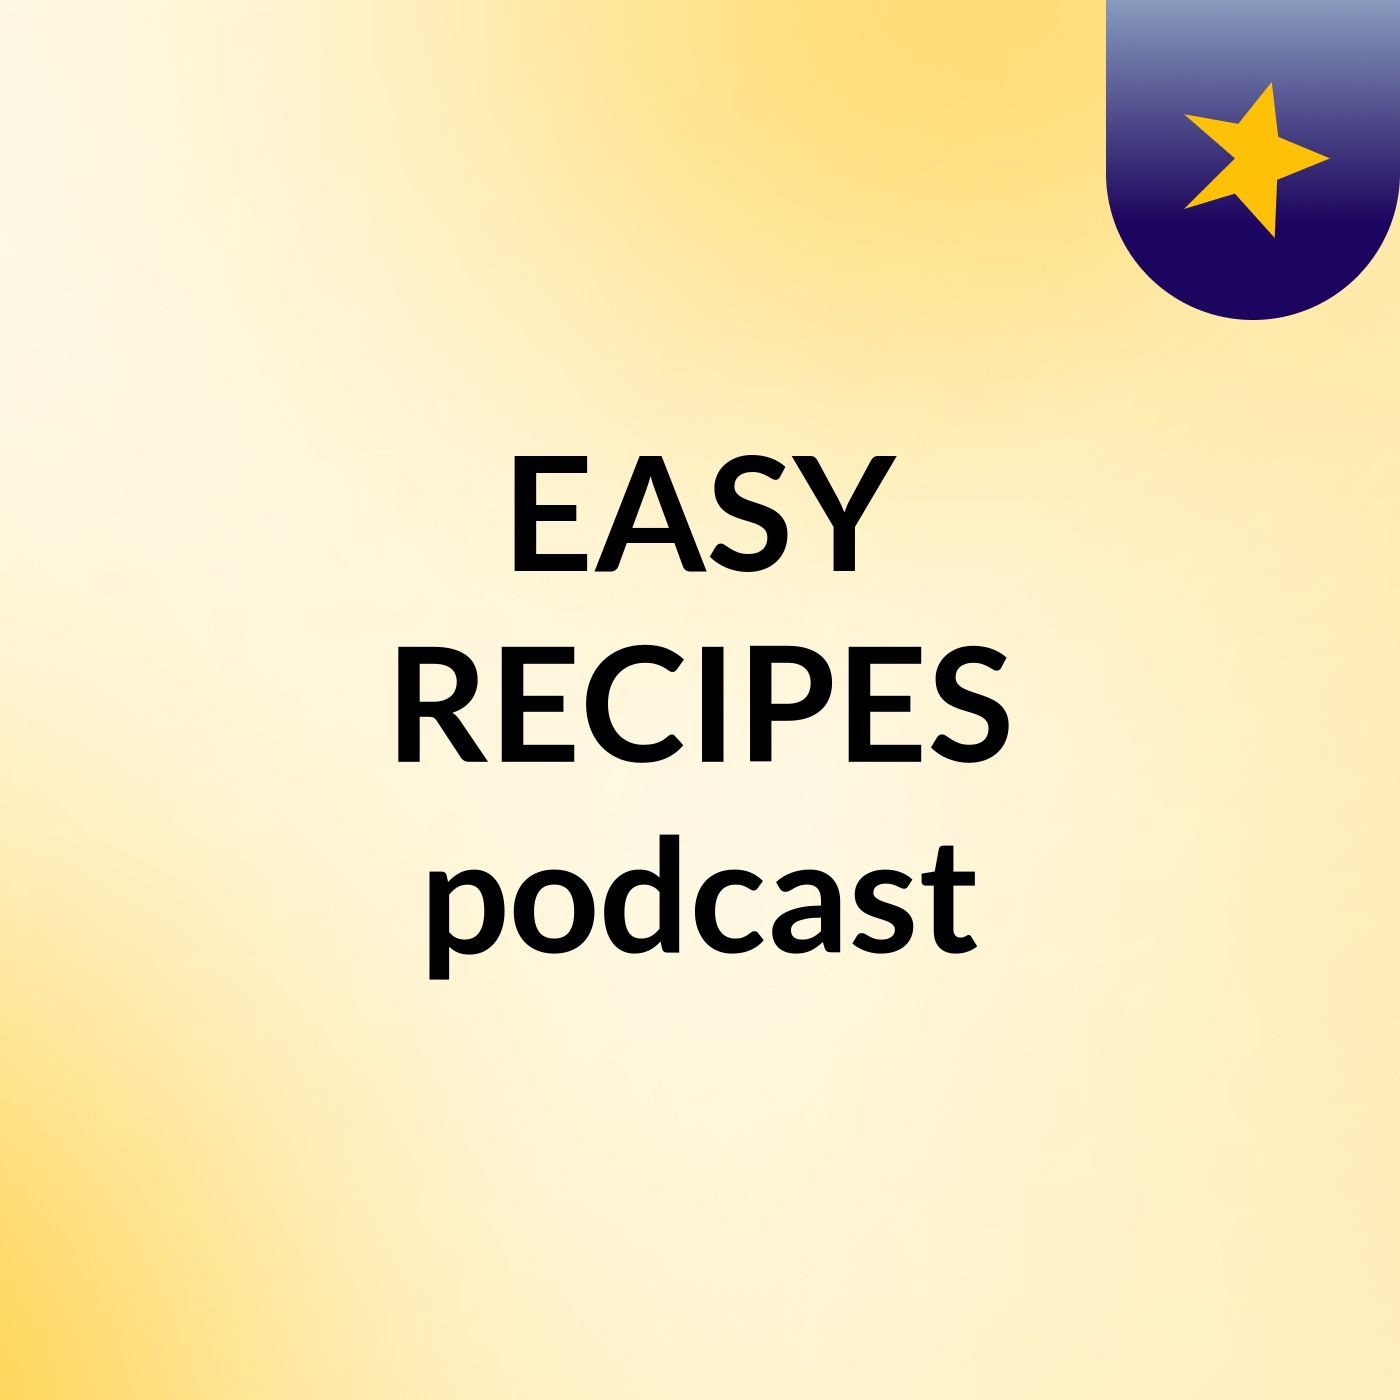 EASY RECIPES' podcast